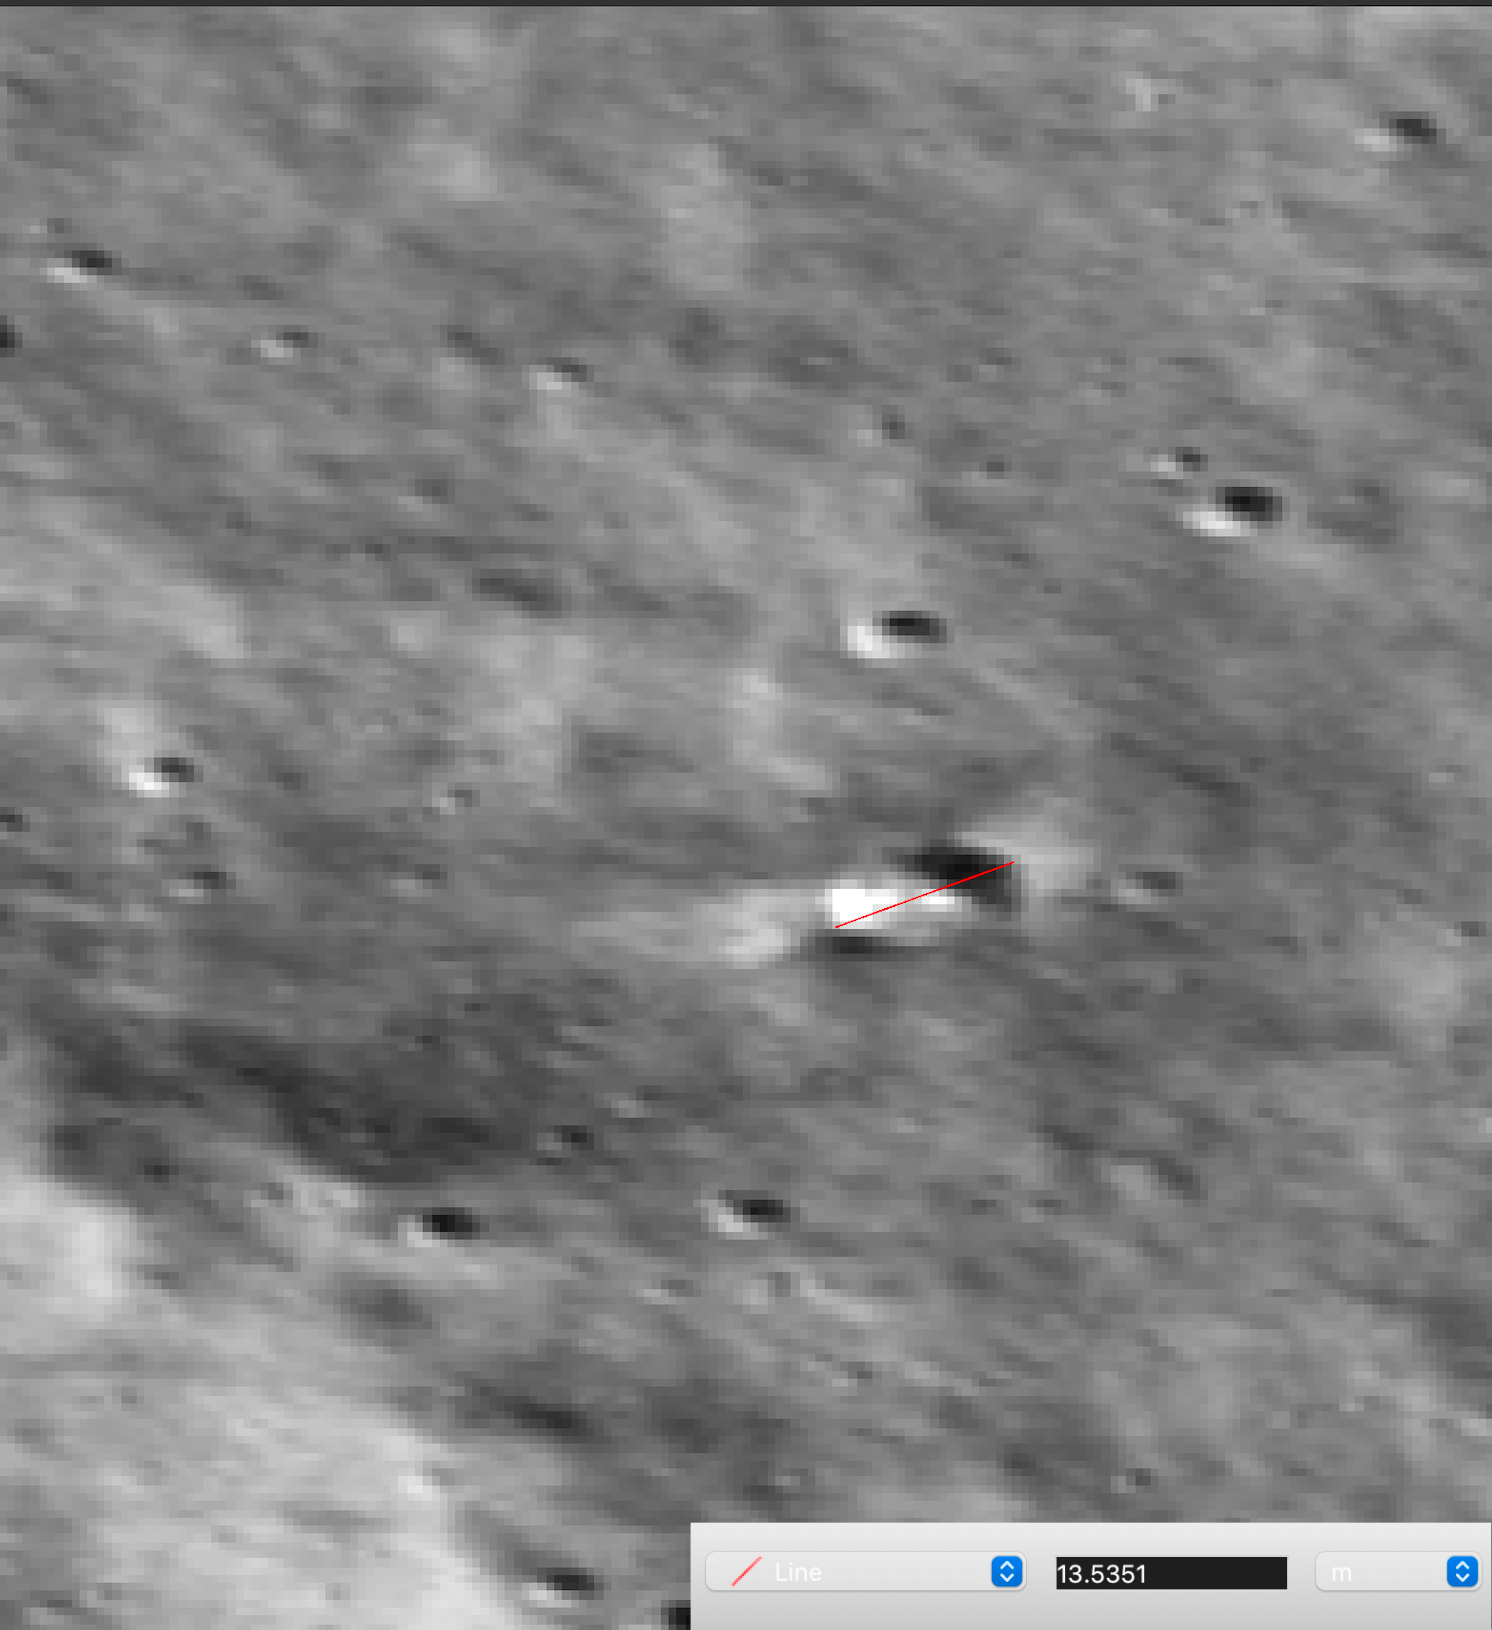 Revisiting the Luna 25 Impact site